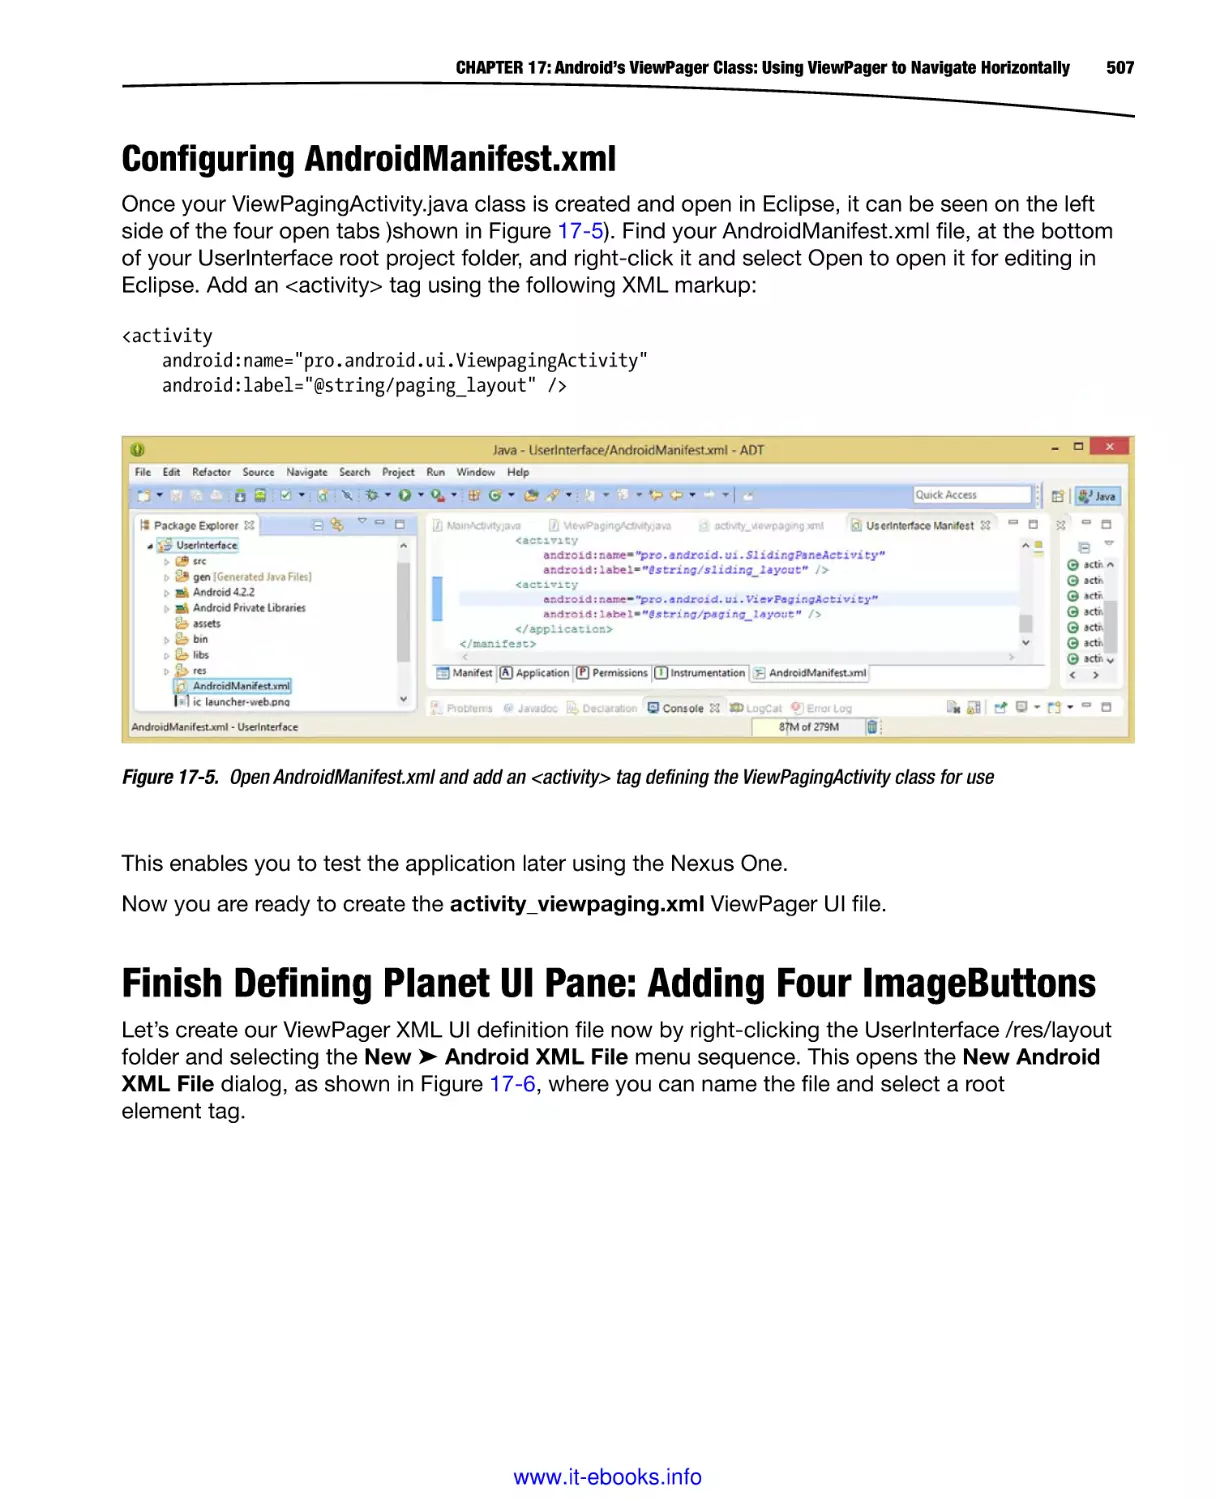 Configuring AndroidManifest.xml
Finish Defining Planet UI Pane